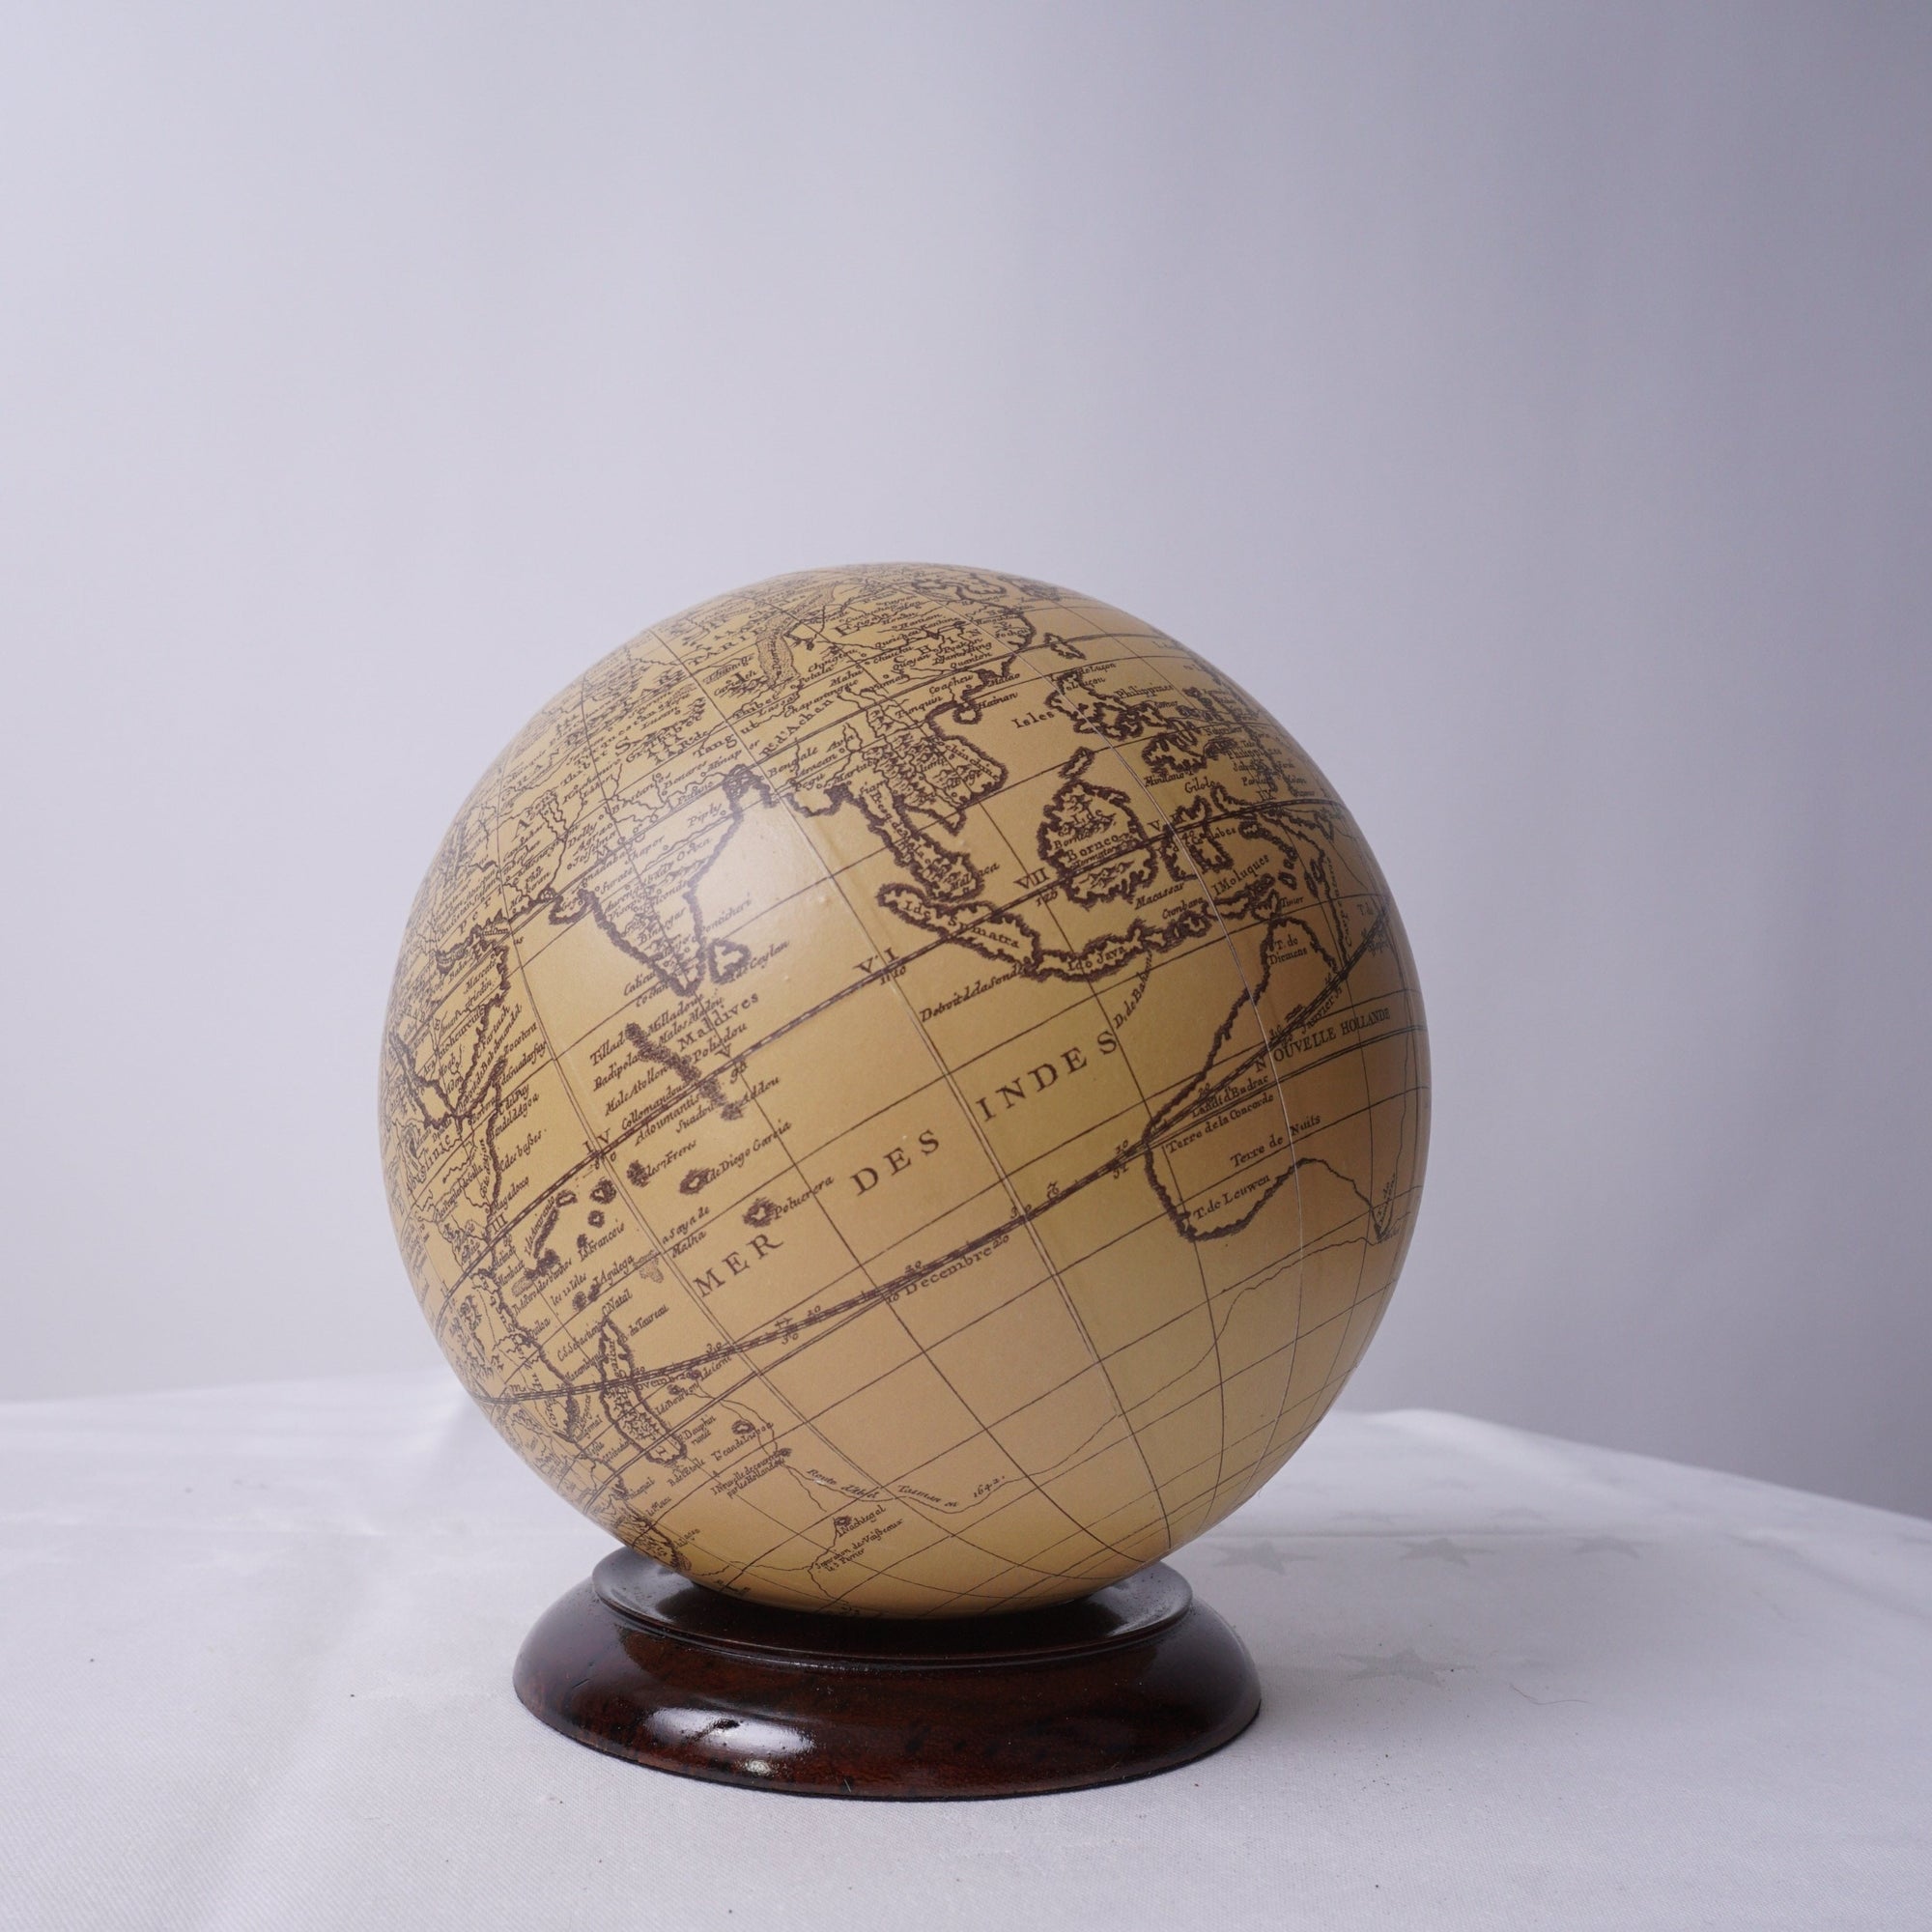 Vaugondy 1745 Large Globe